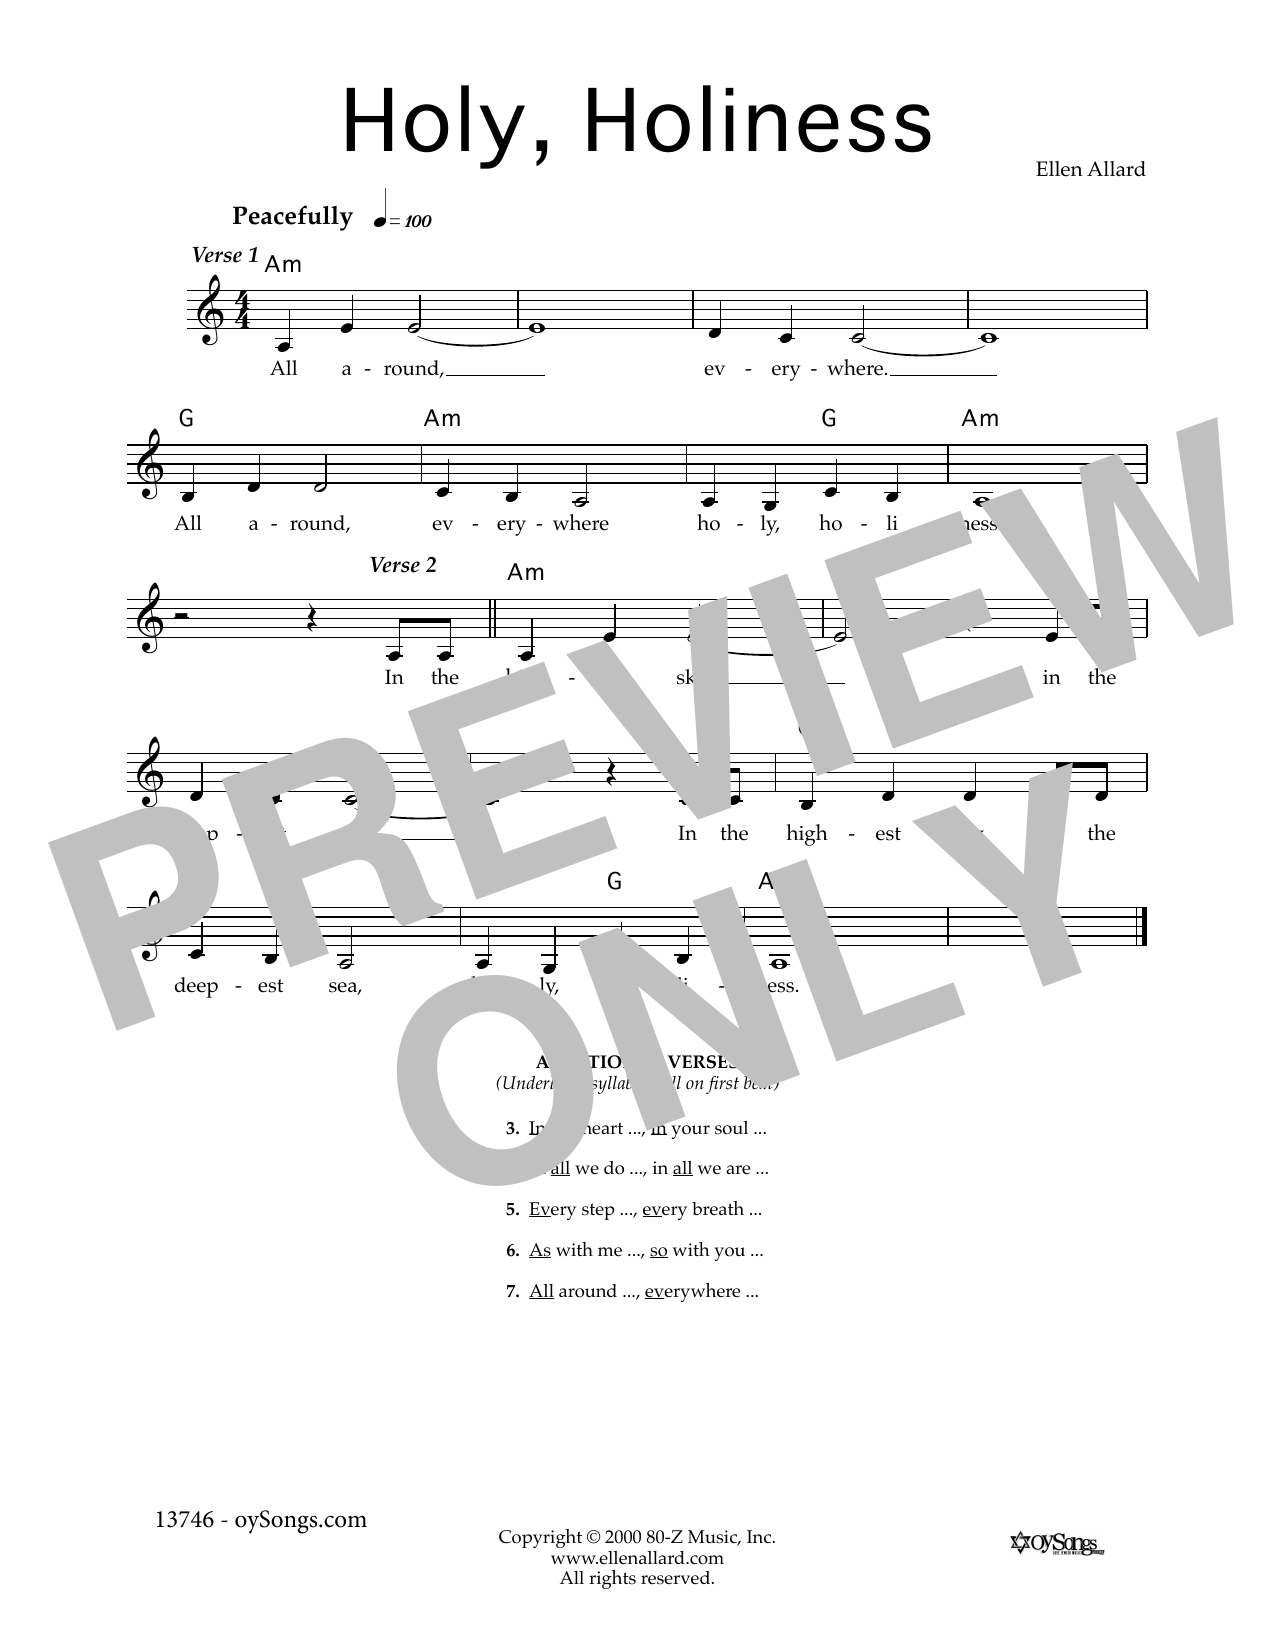 Ellen Allard Holy, Holiness Sheet Music Notes & Chords for Melody Line, Lyrics & Chords - Download or Print PDF